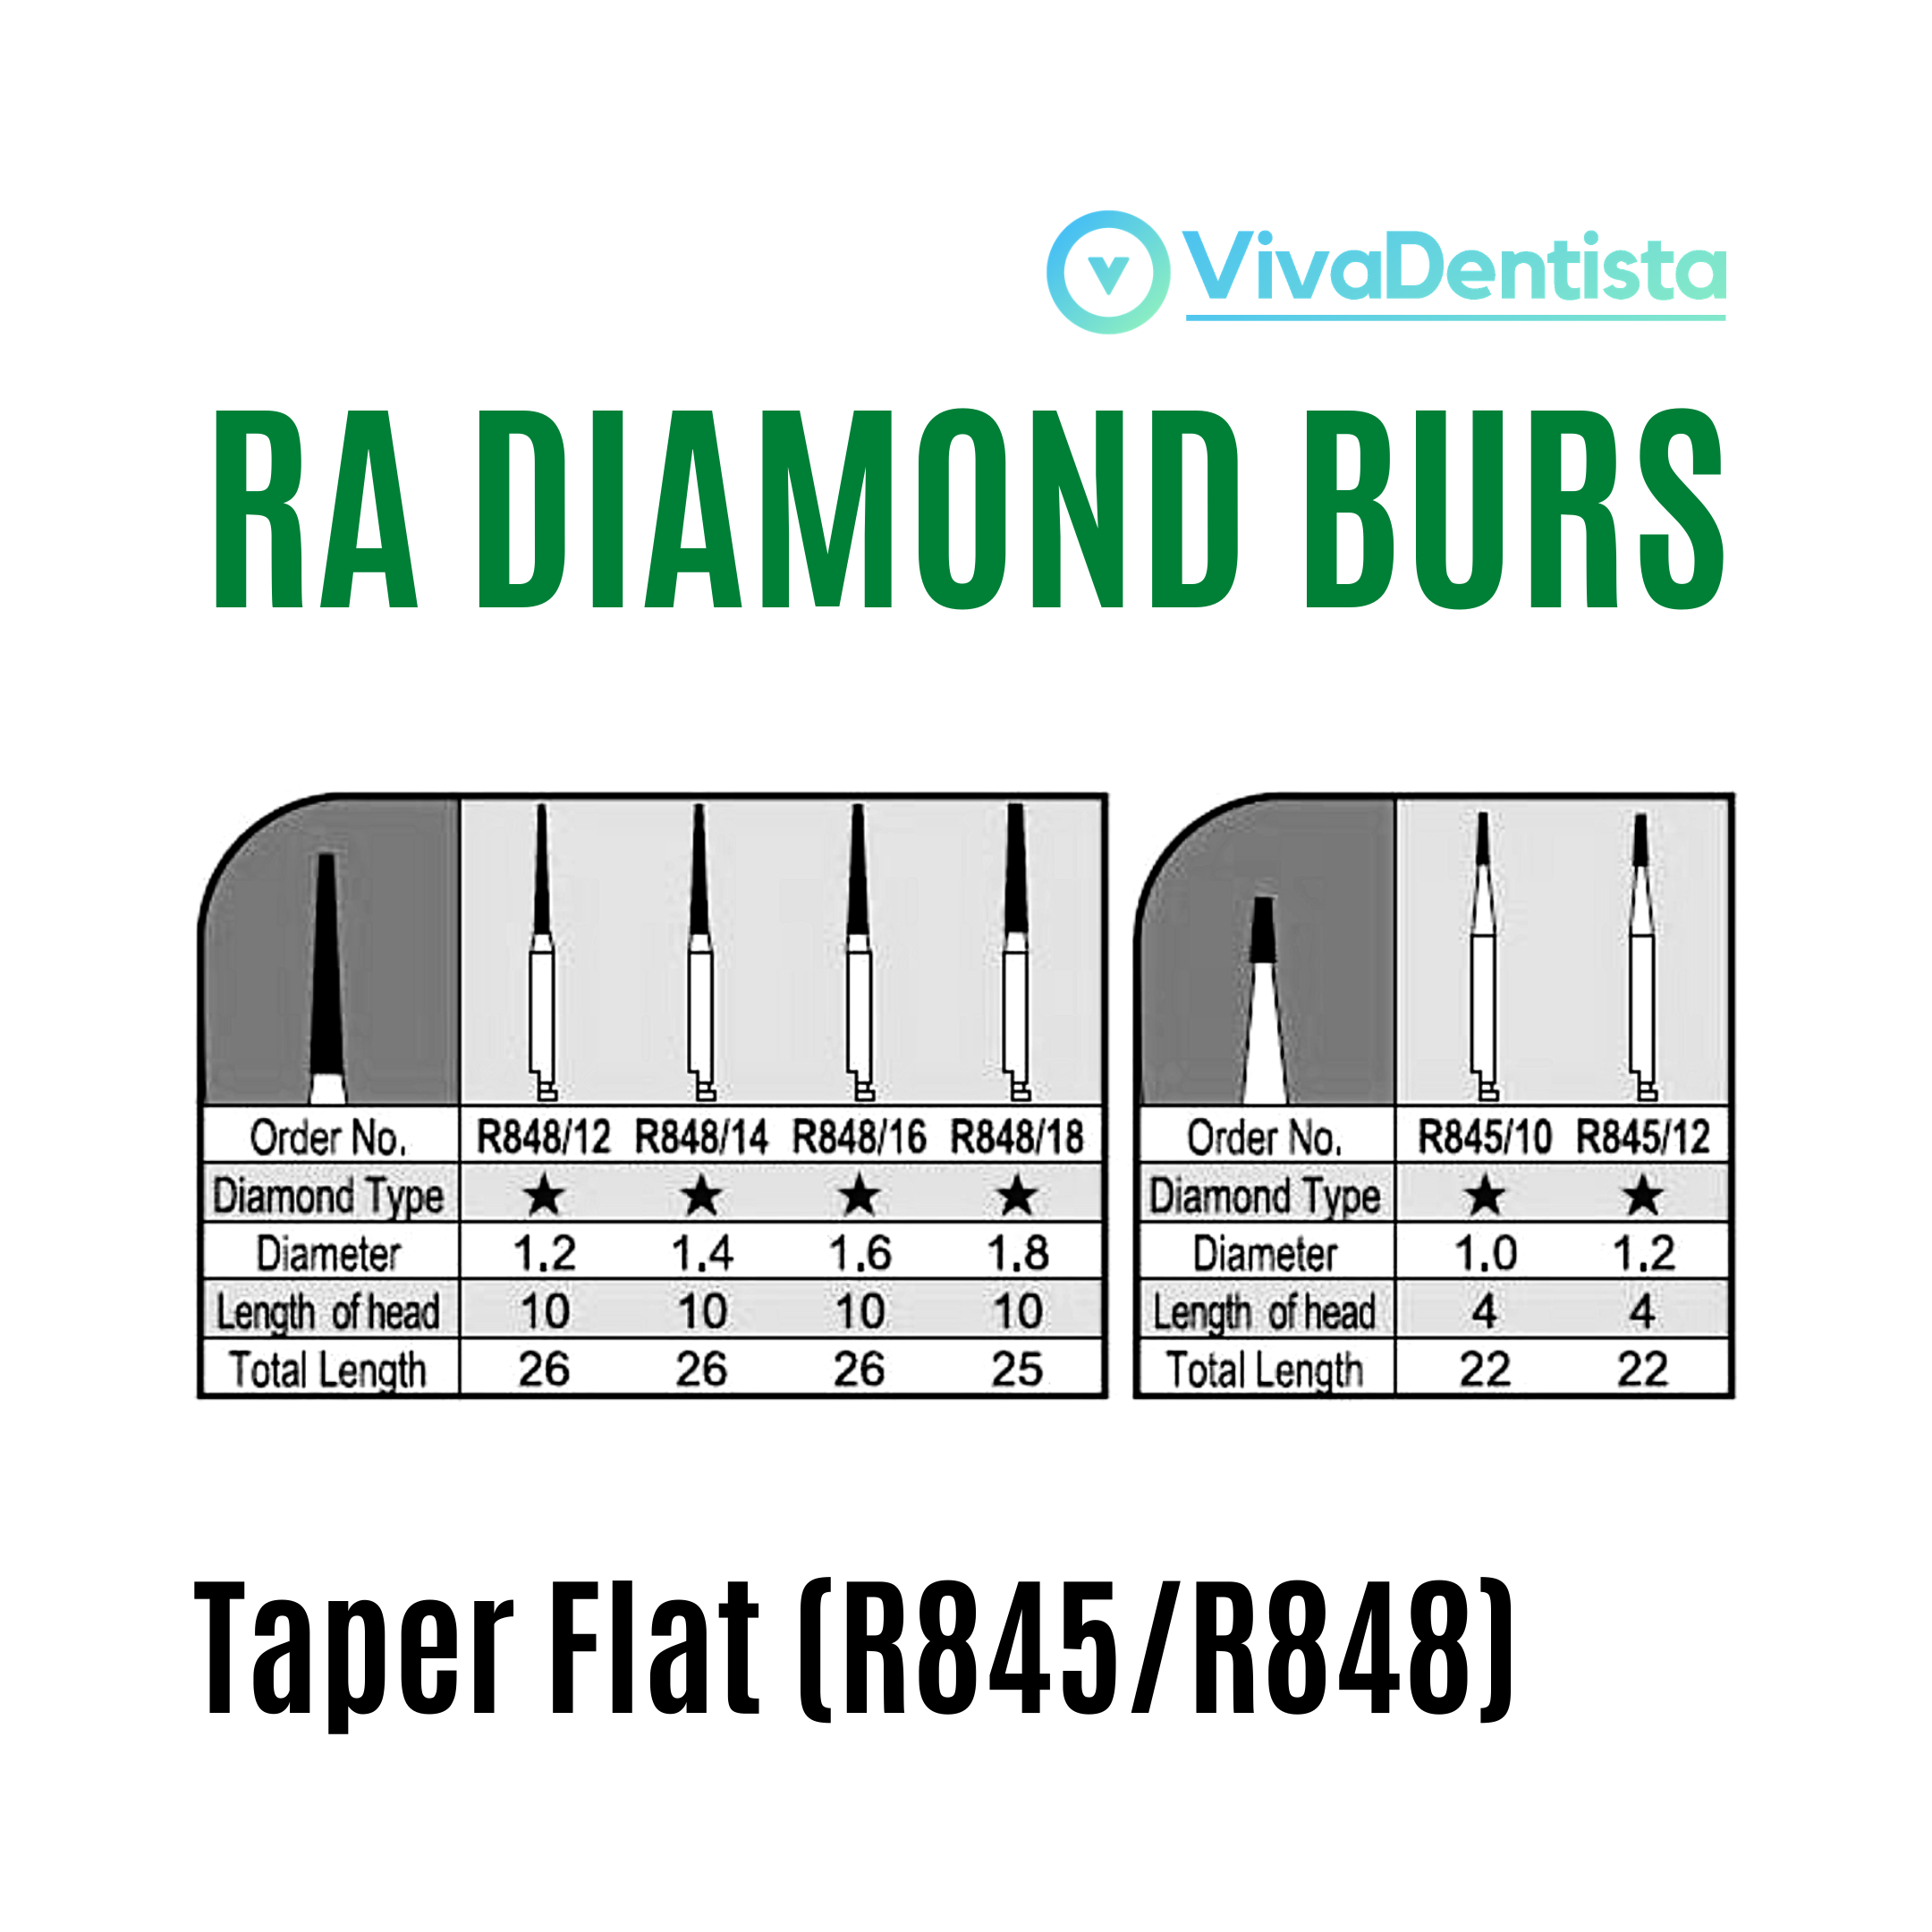 RA Diamond Burs (Taper Flat) - 5pcs